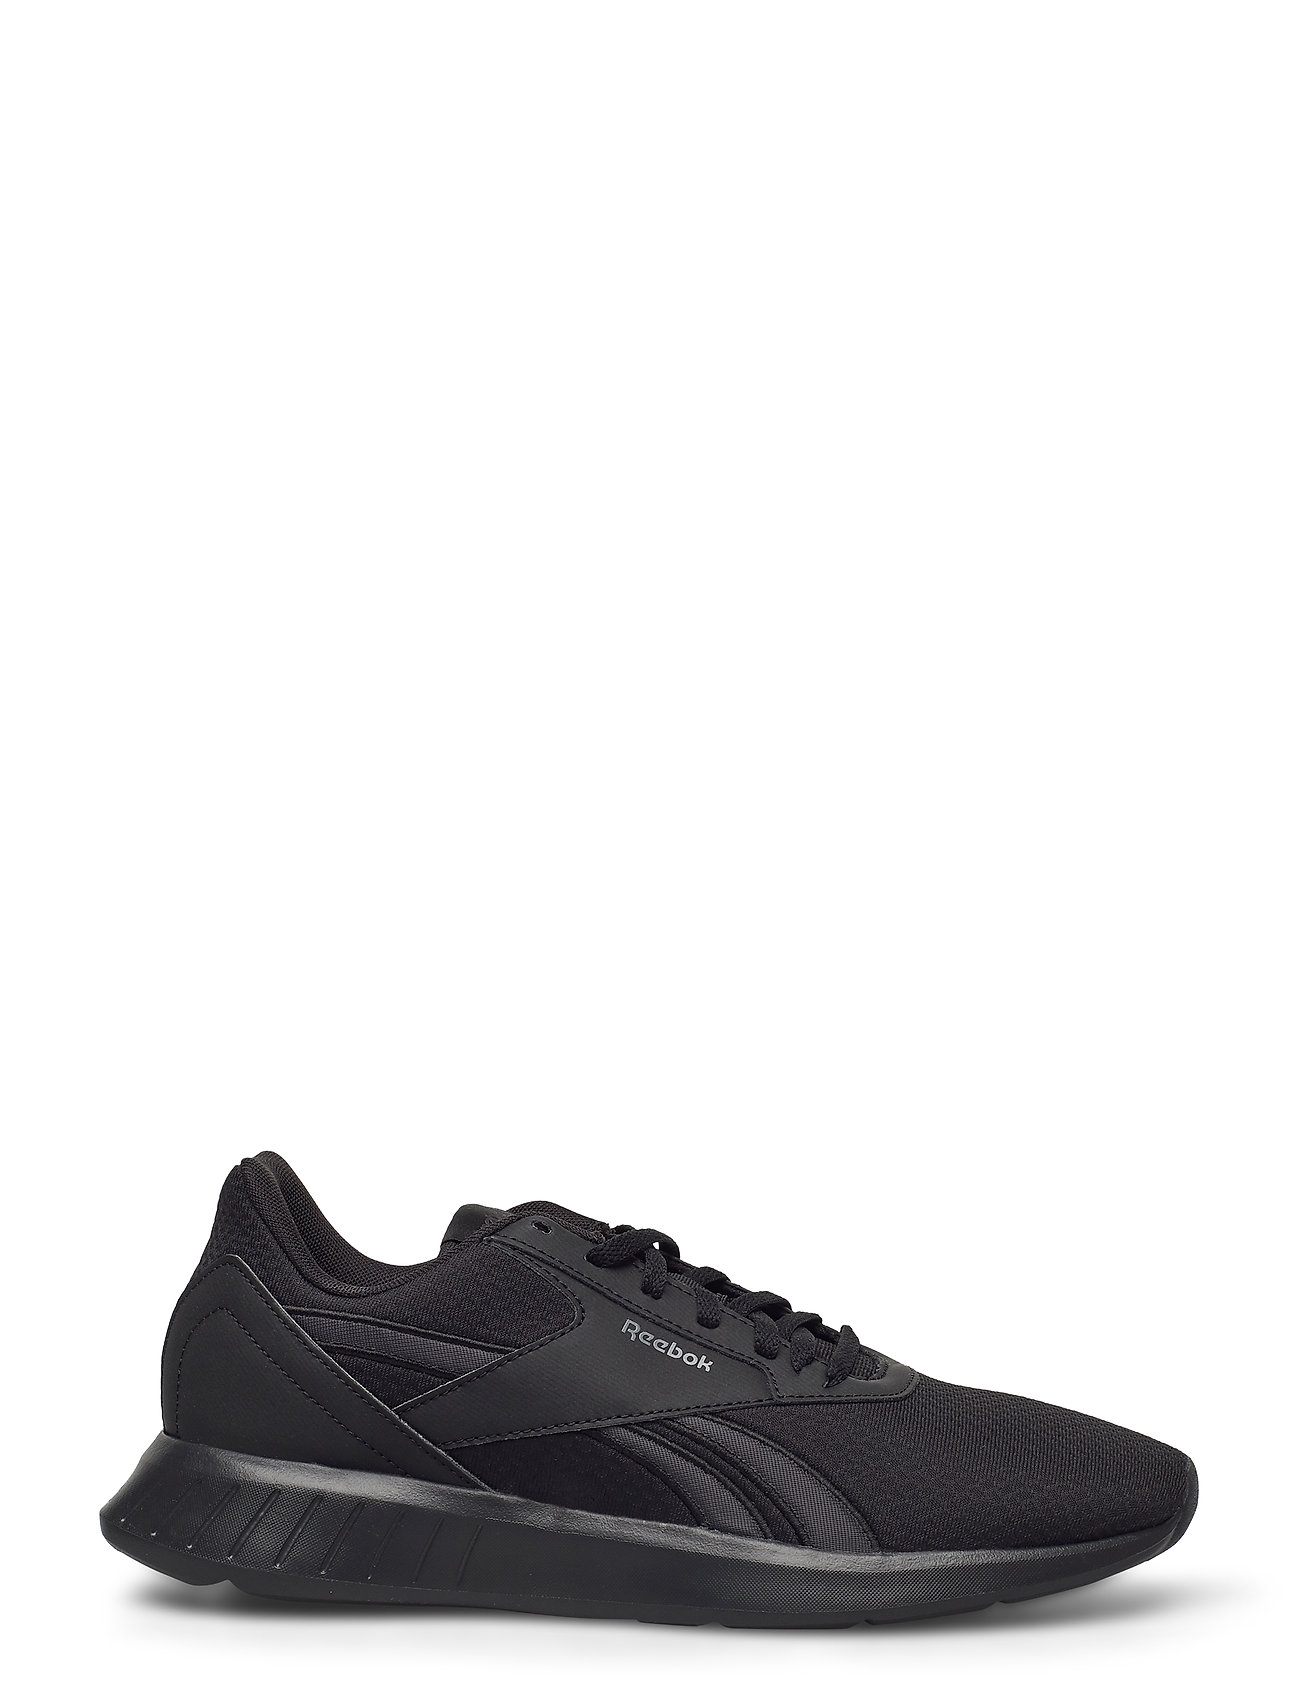 Black/black/trgry8 Reebok Performance Reebok Lite 2.0 Shoes Sport Shoes Running Shoes Performance løbesko for herre